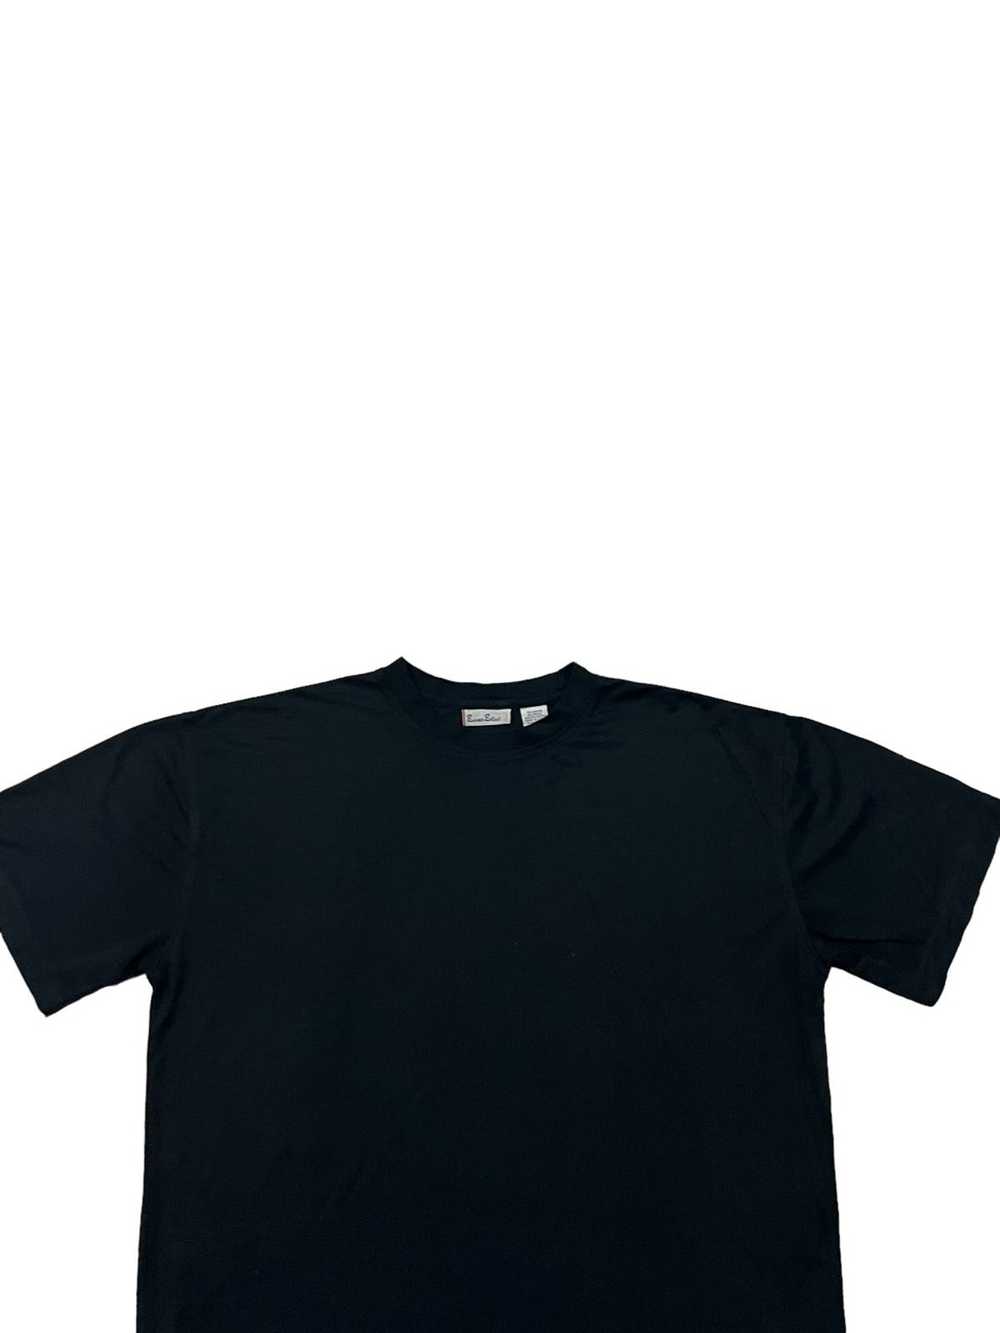 Burma Bibas Burma Bibas T-shirt Size M -Black- - image 3